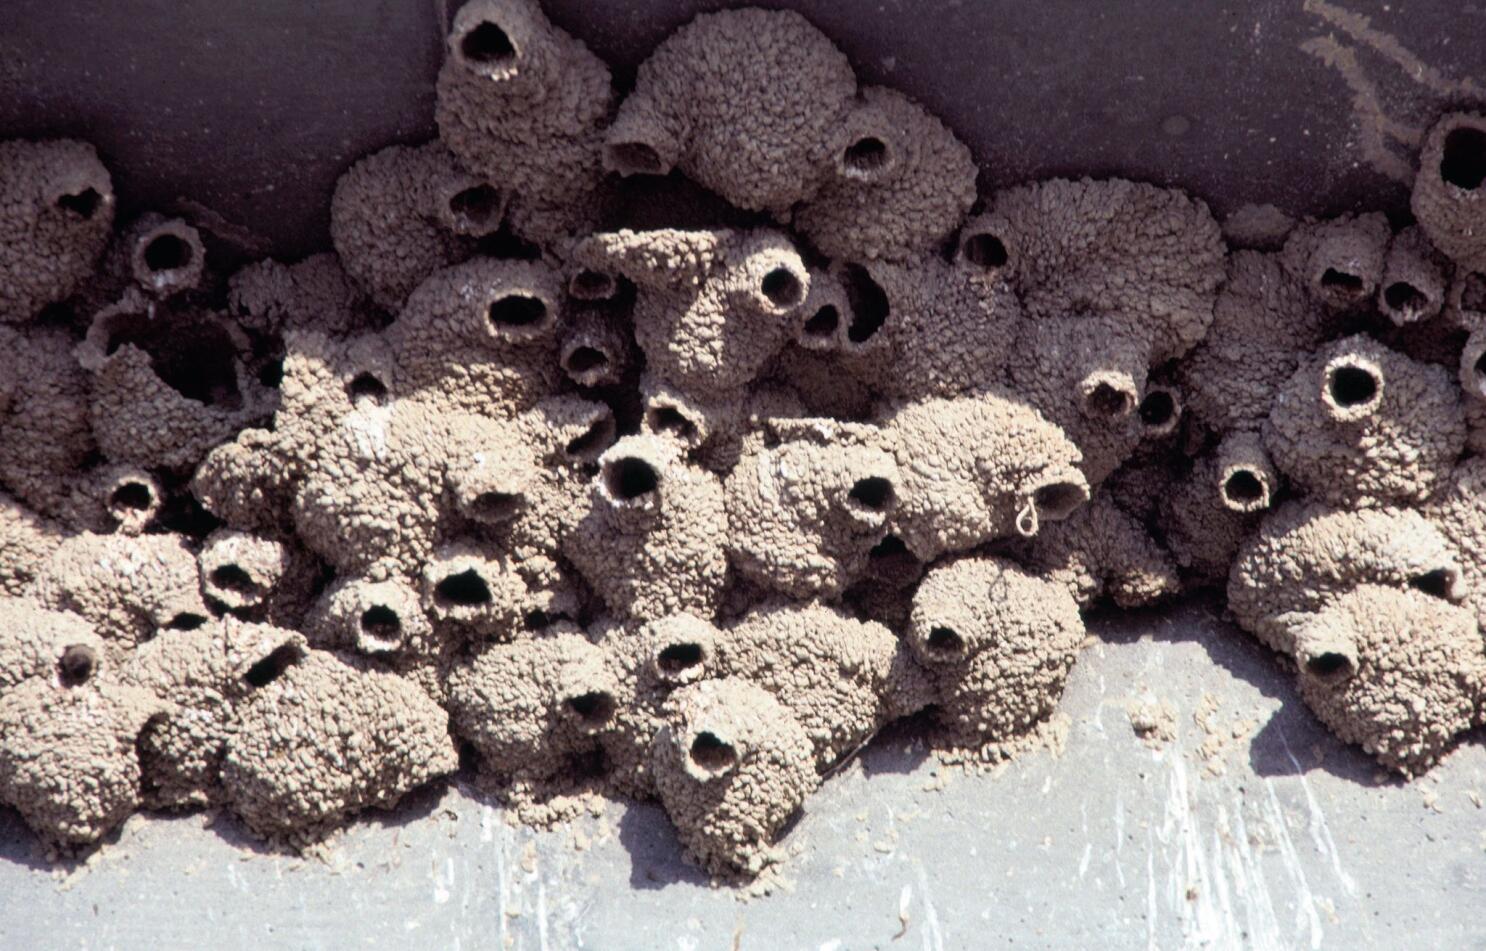 Swallow nests can be health hazard - The San Diego Union-Tribune